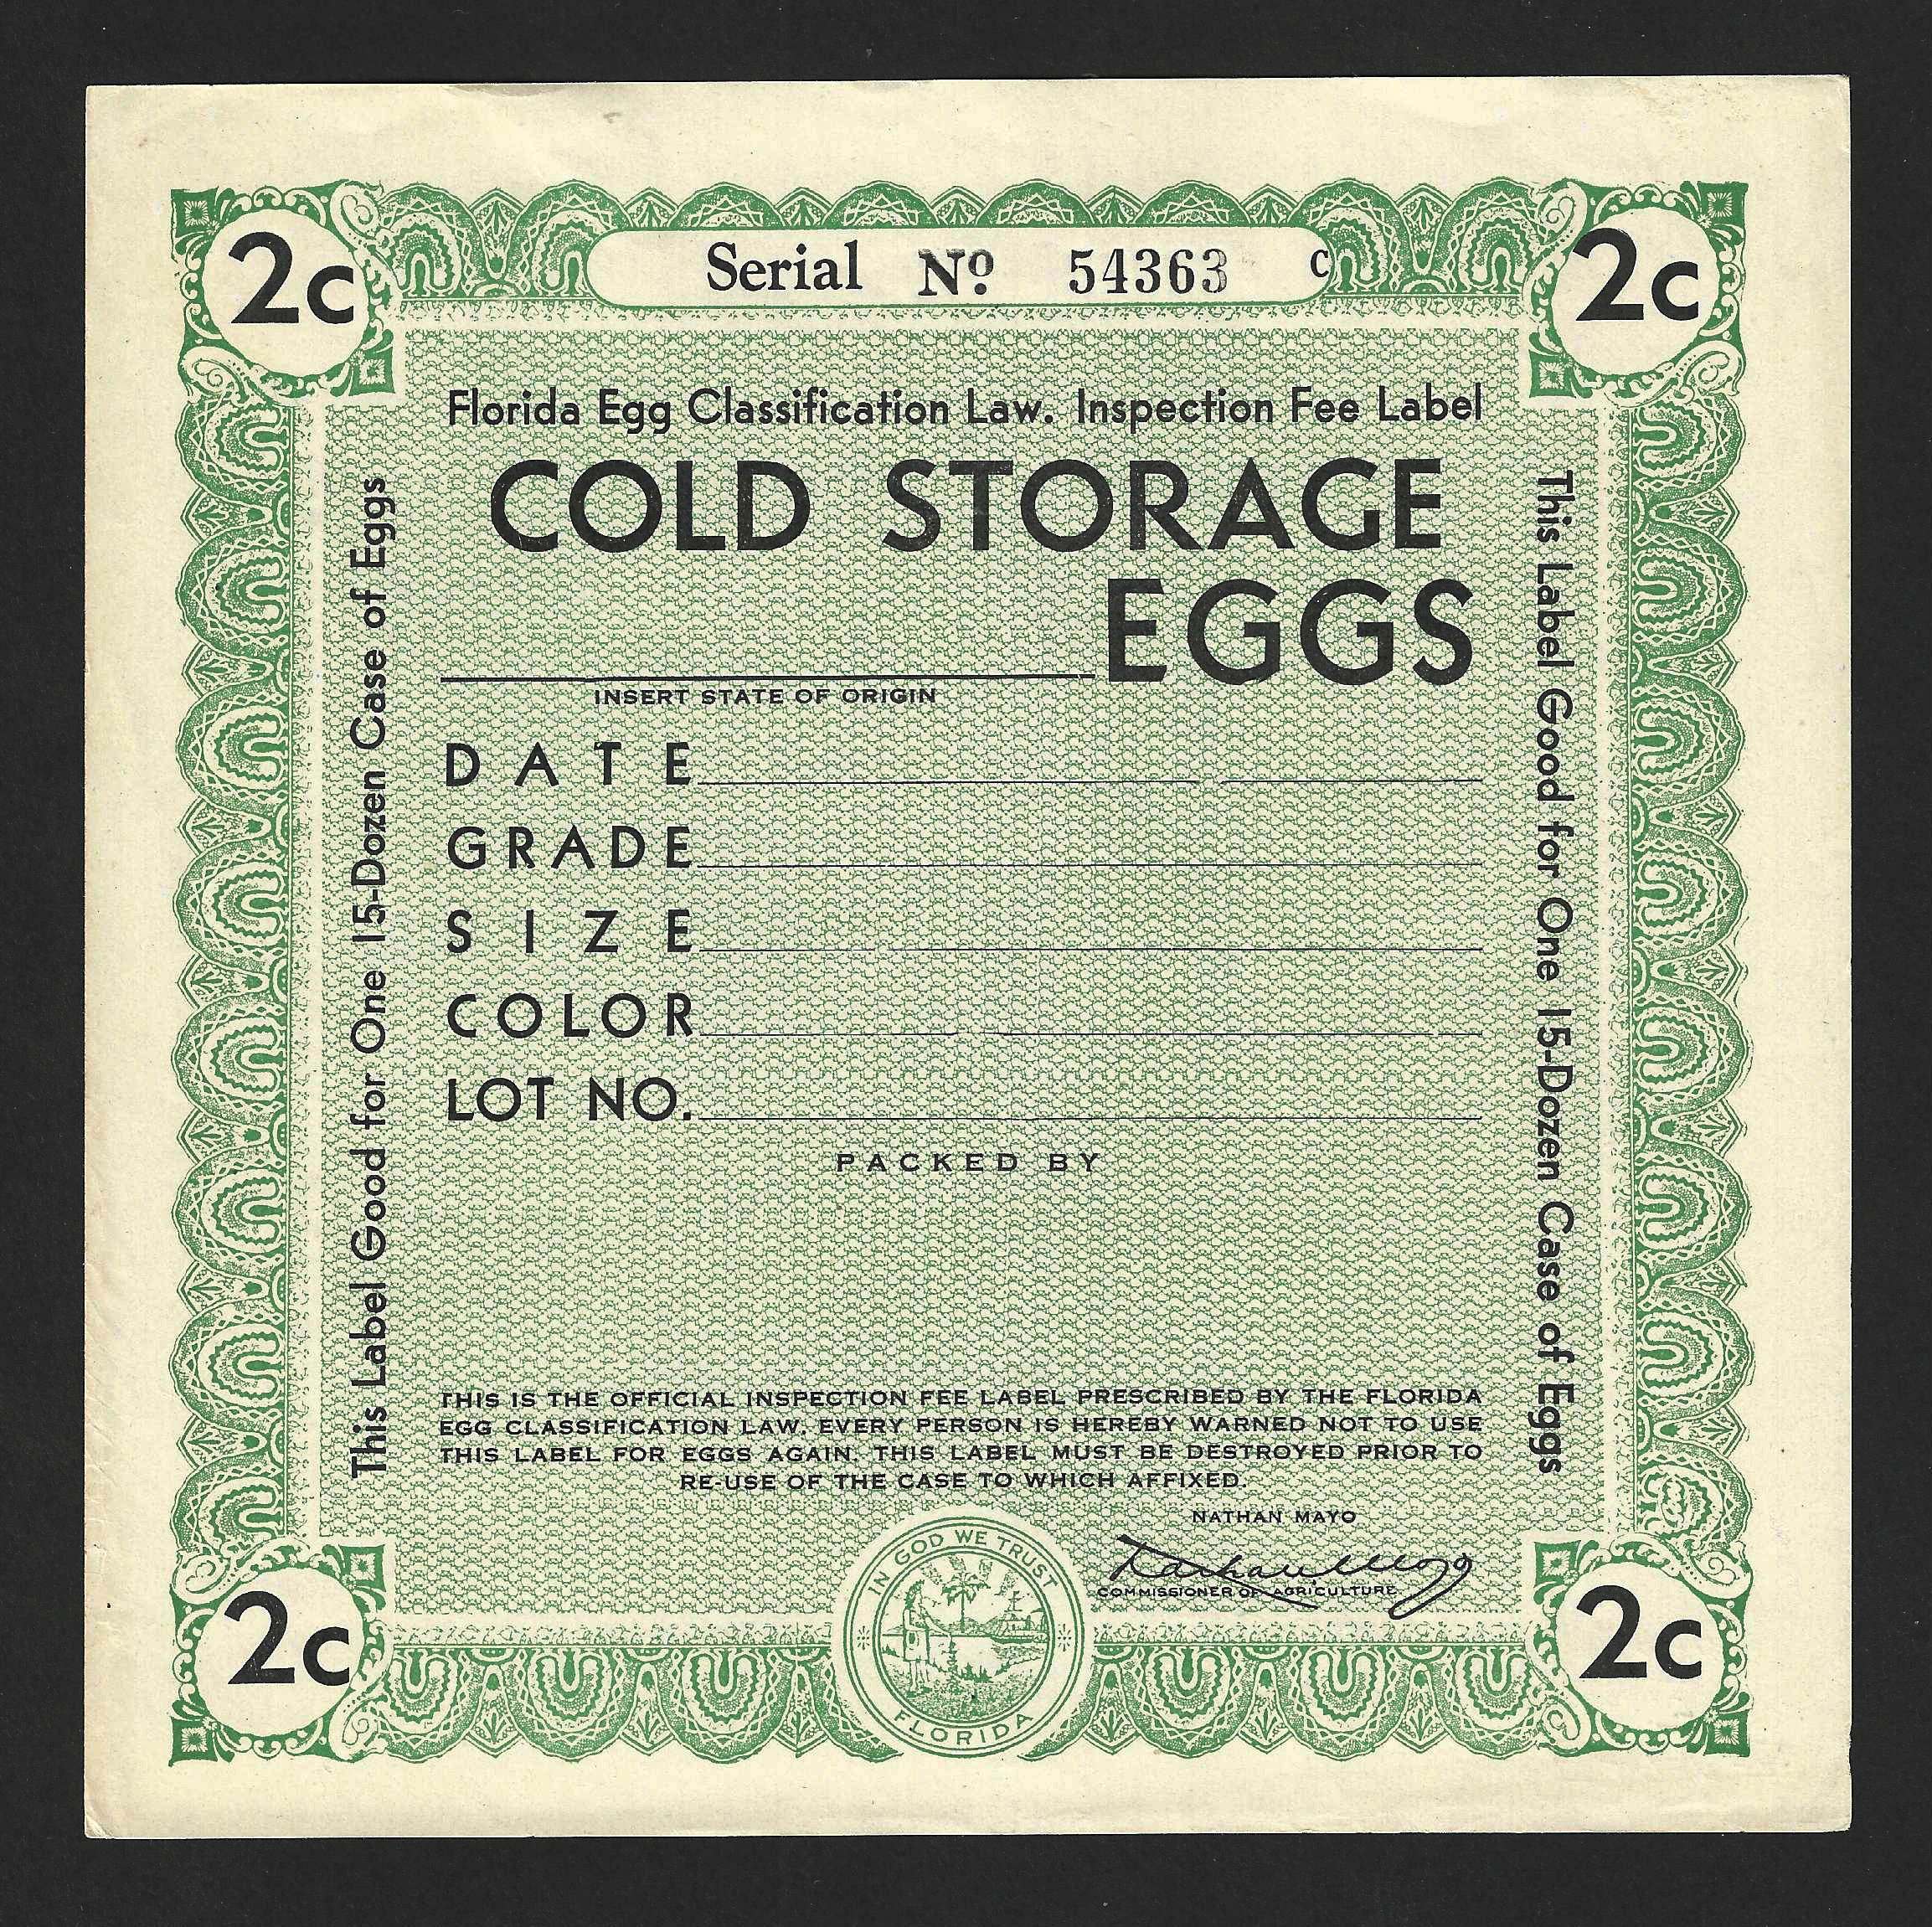 Fl egg case E84 2¢ Cold Storage Eggs (C)  green MNH VF w/ slight toningnot priced as mint